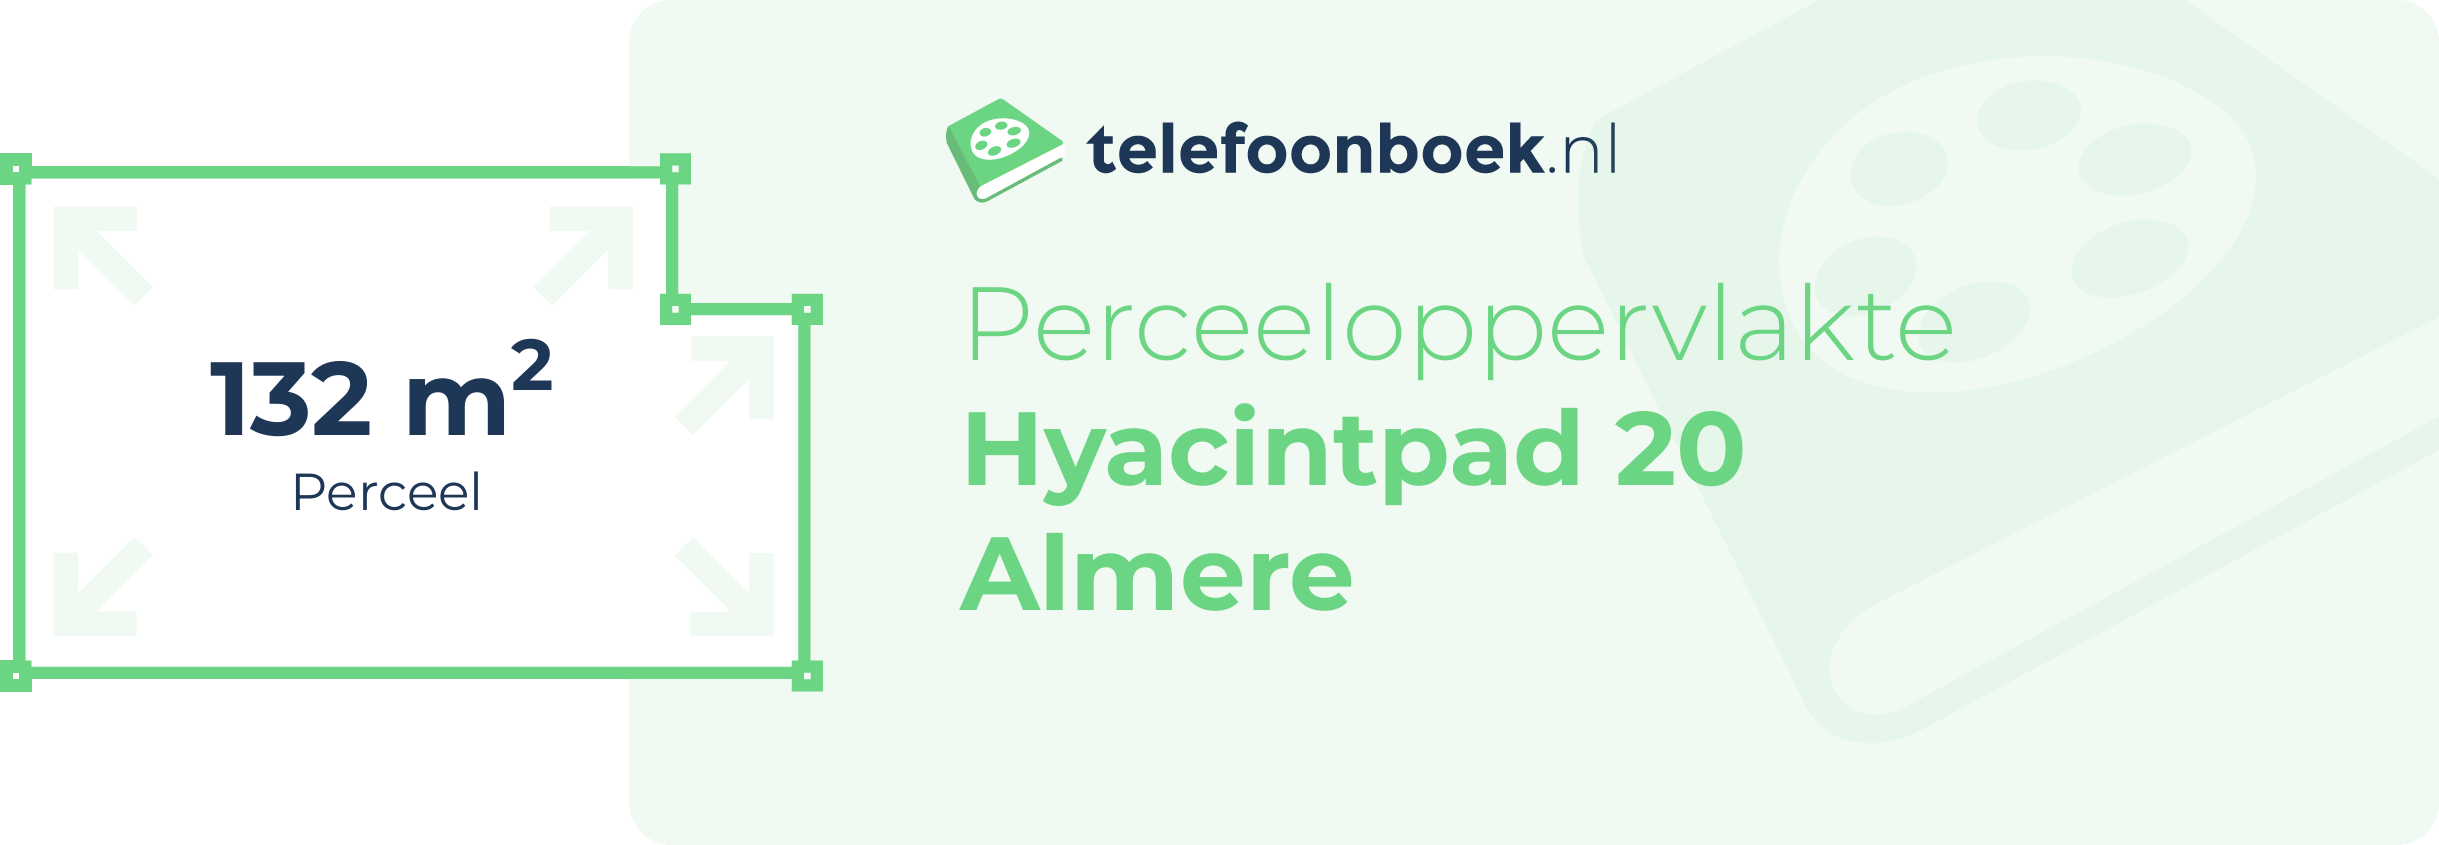 Perceeloppervlakte Hyacintpad 20 Almere